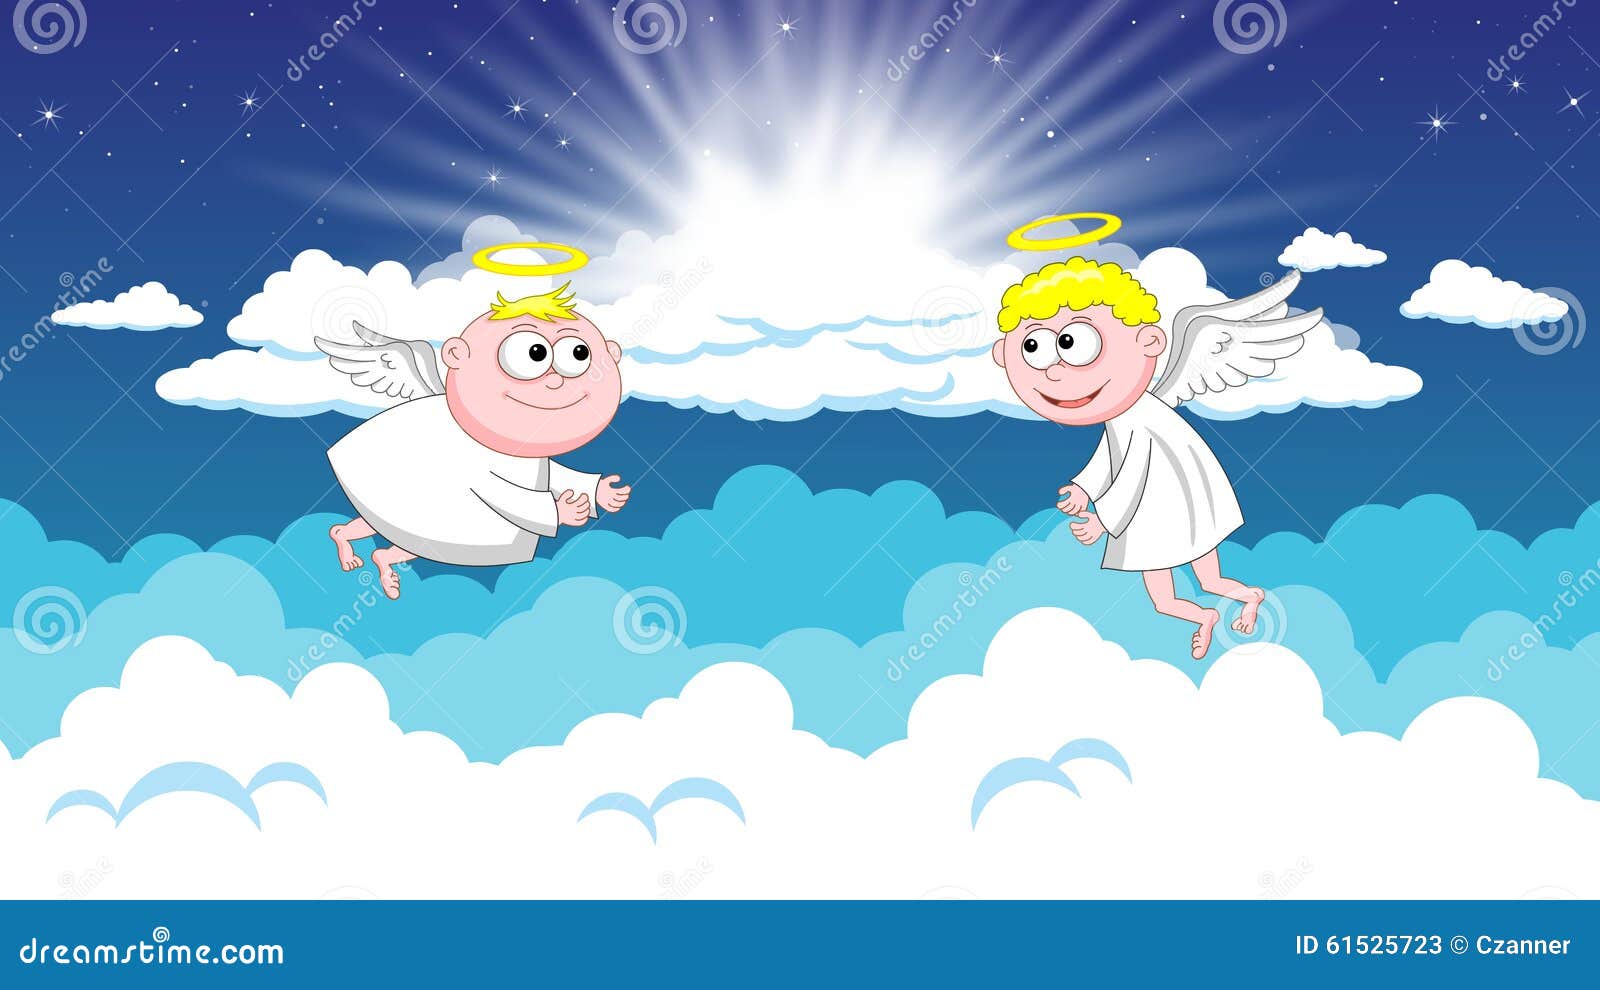 Angels in heaven stock illustration. Illustration of beauty - 61525723